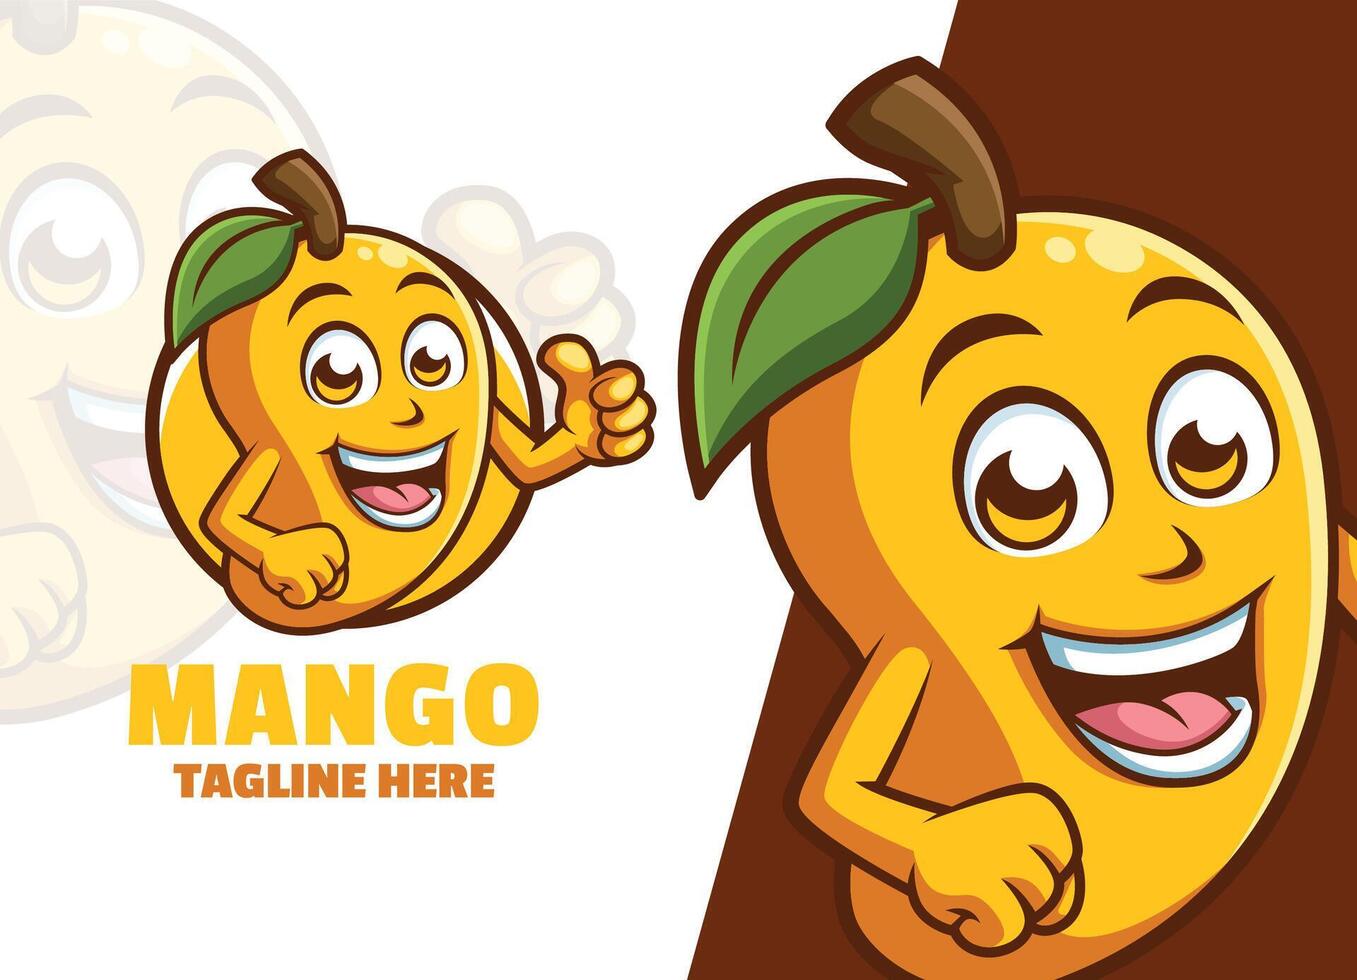 Cute Mango Cartoon character mascot logo Giving Thumb up vector illustration